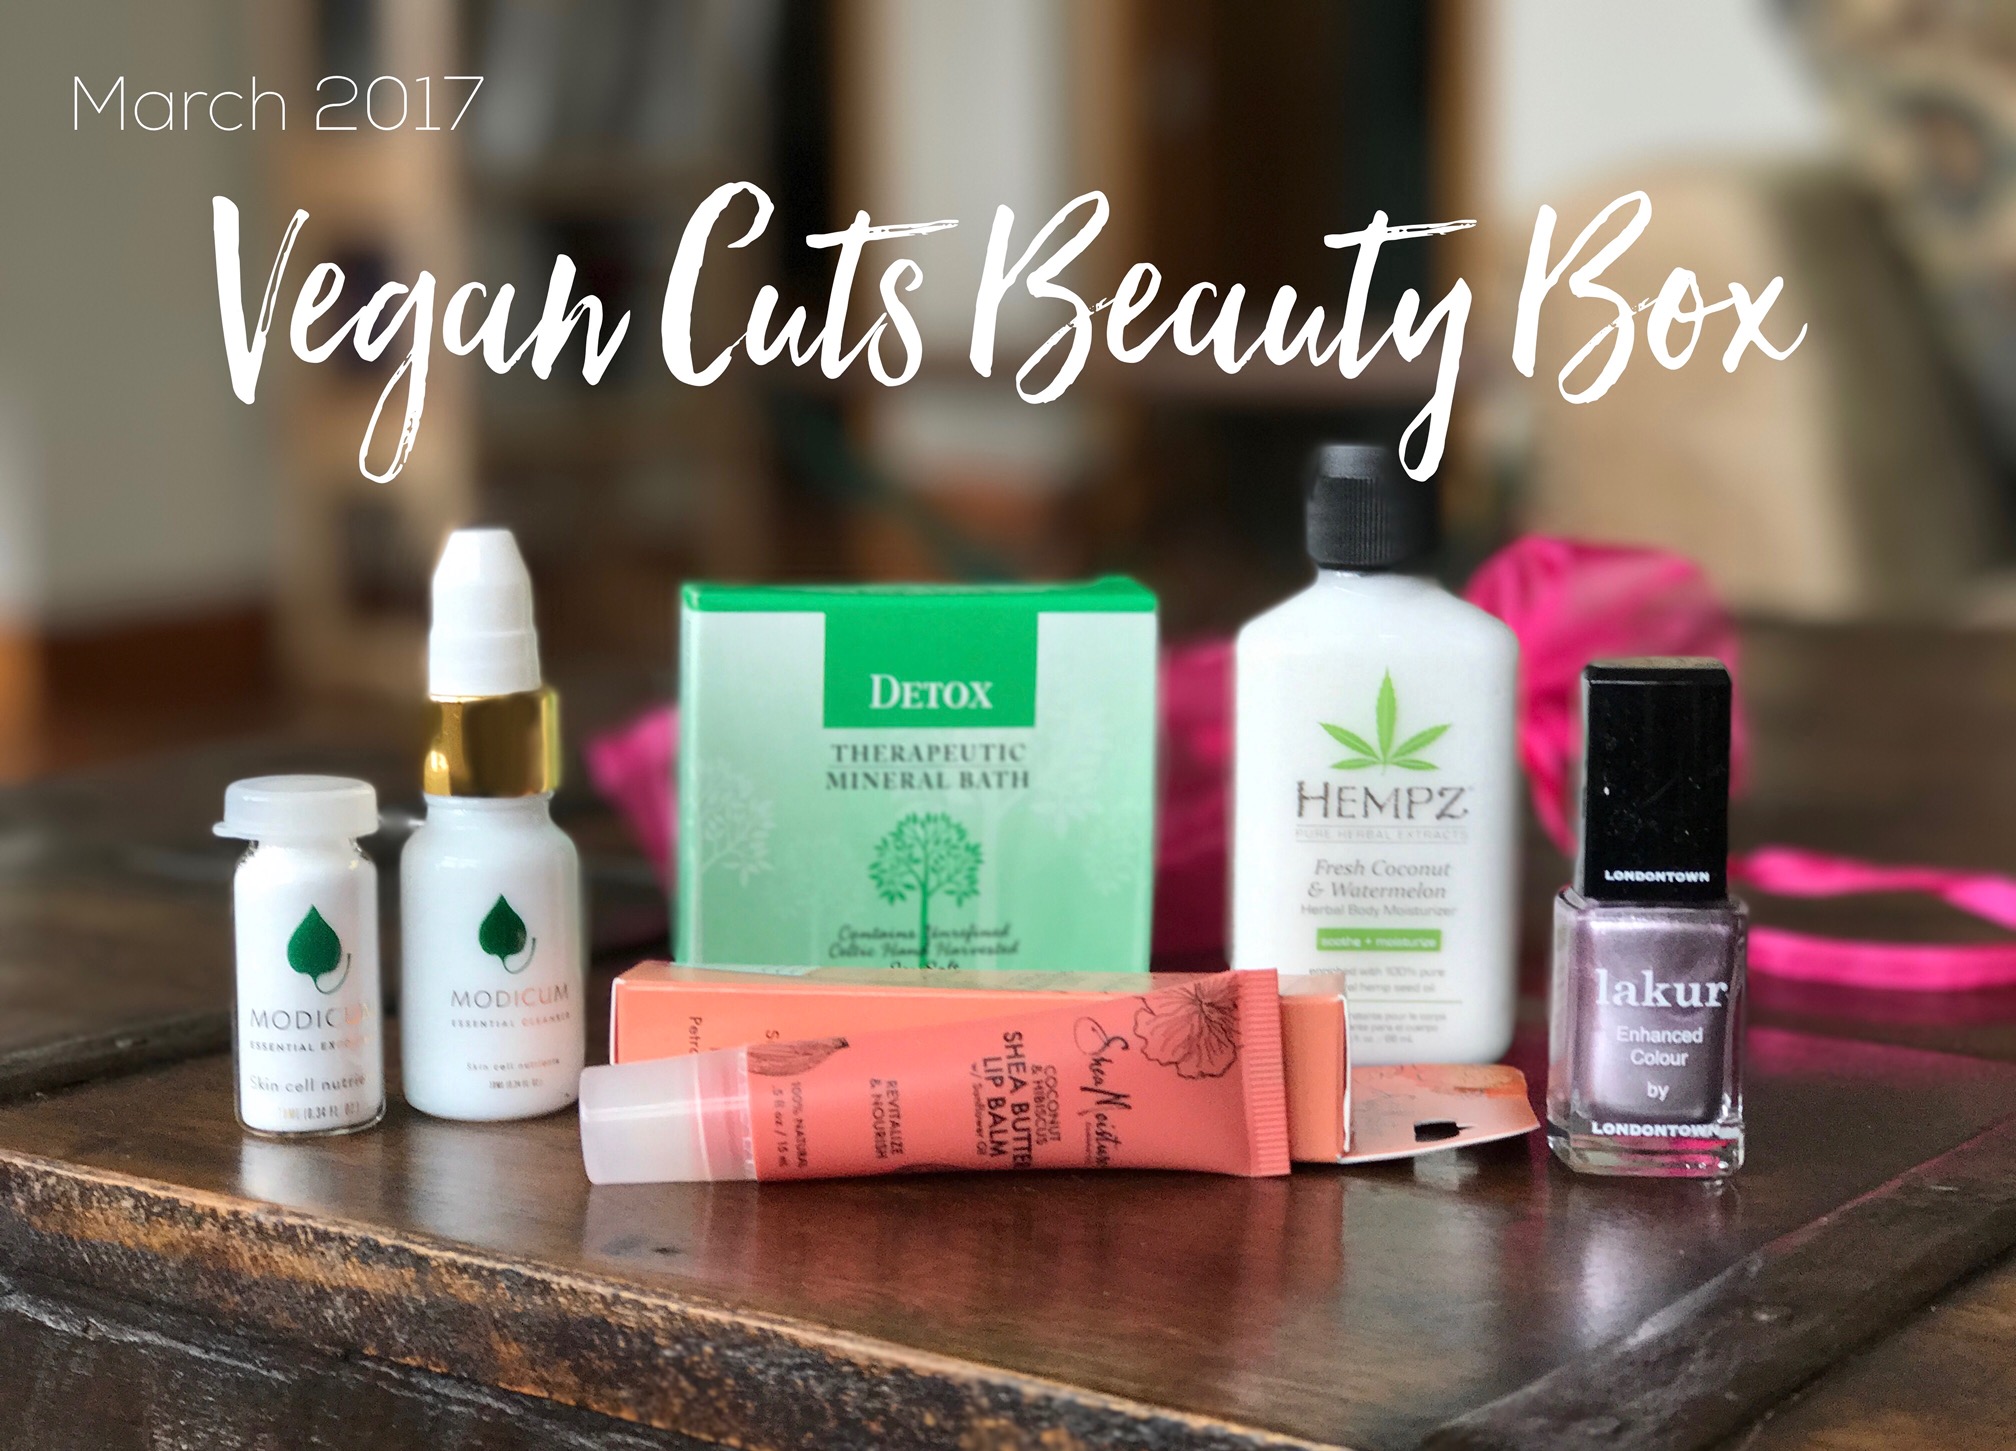 March 2017 Vegan Cuts Beauty Box